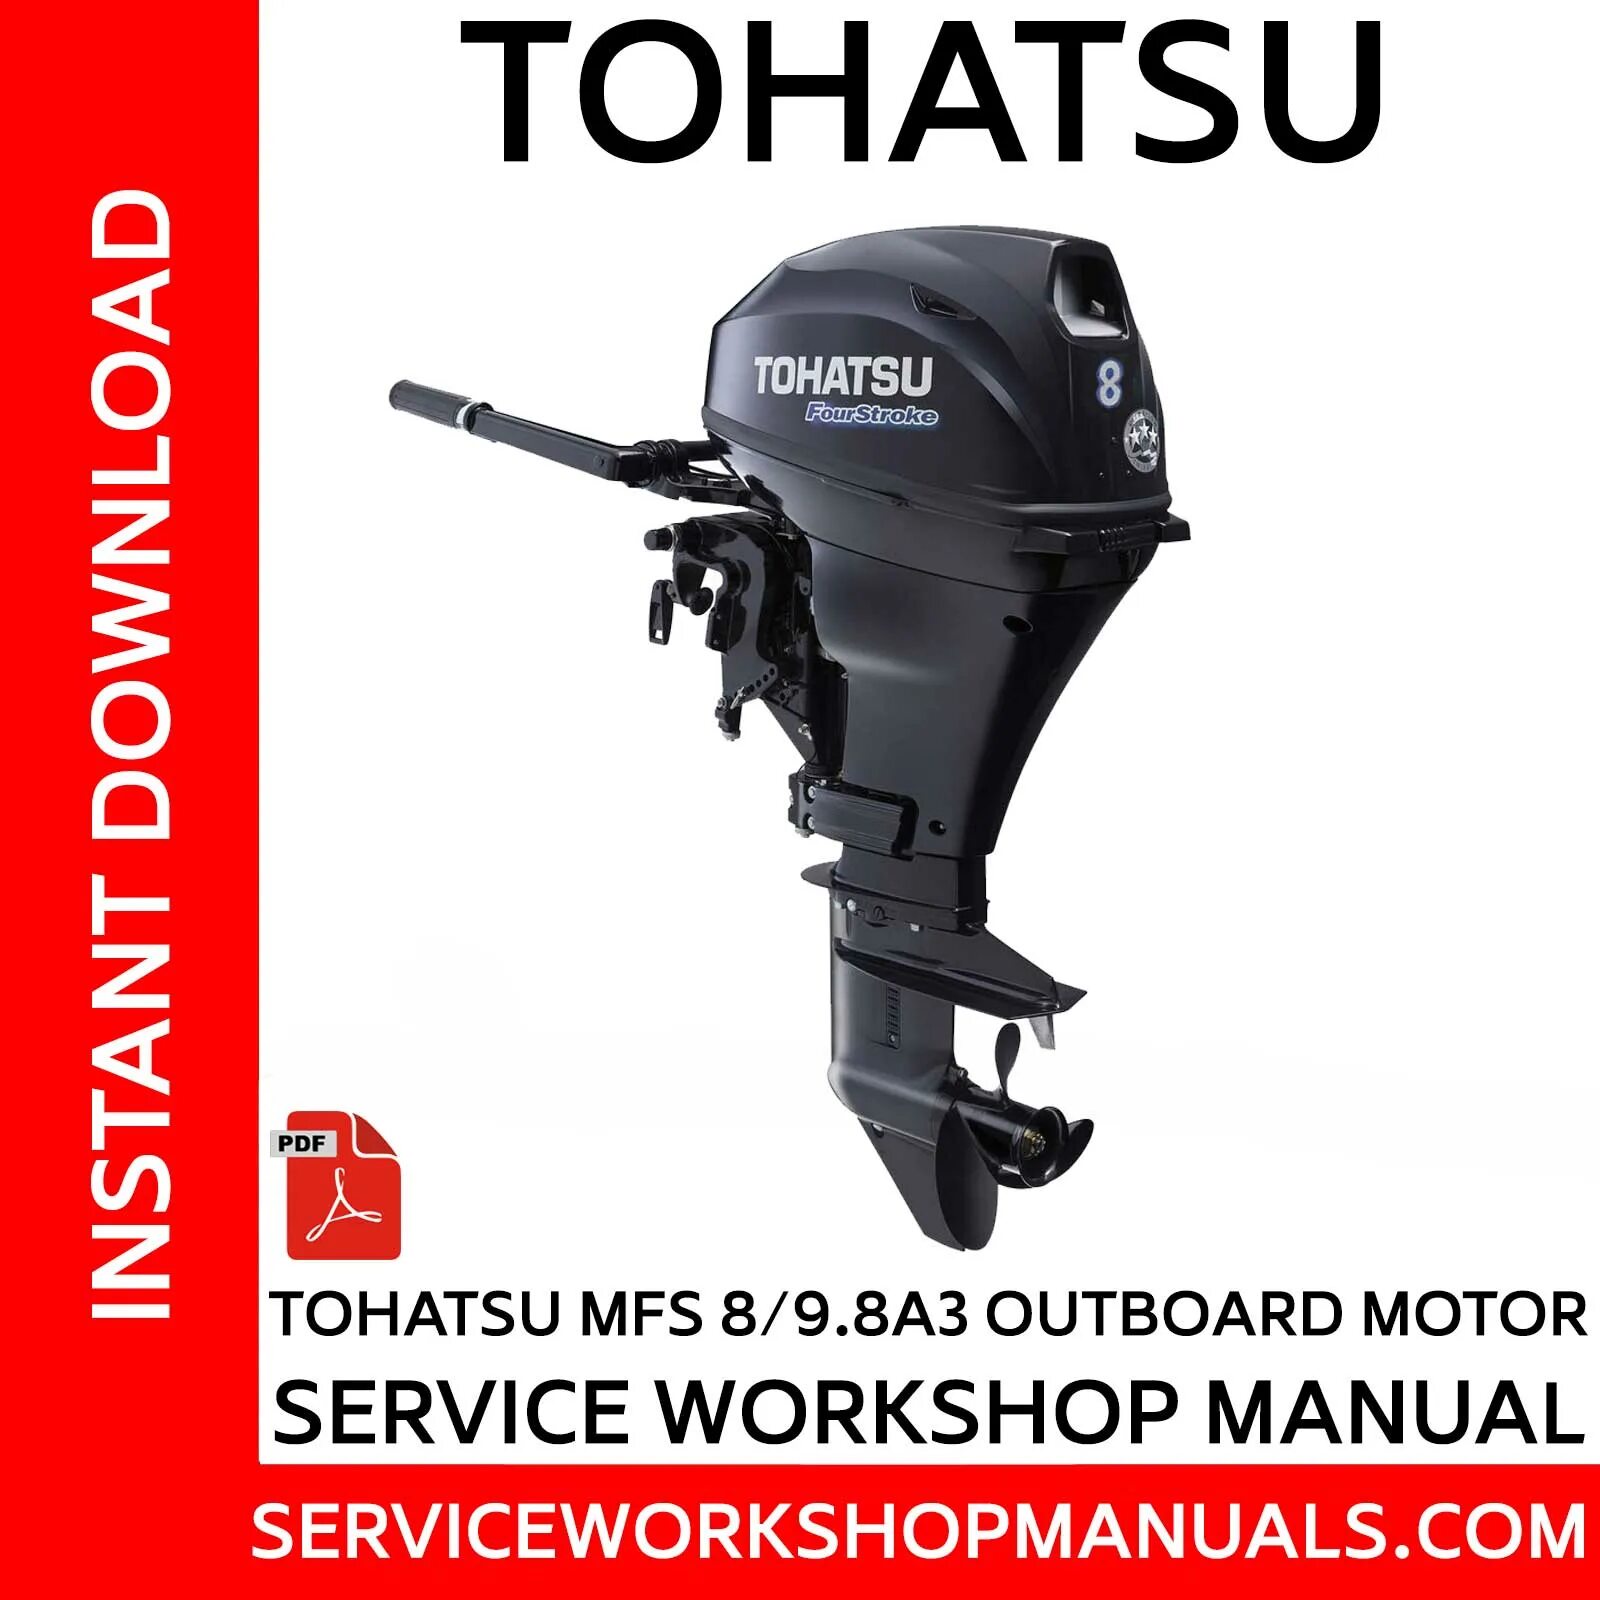 Tohatsu MFS 9.8. Tohatsu 5 owners manual. Manual Tohatsu MFS 9.9. Tohatsu MFS 9.9eps service manual. Авито лодочные моторы 9.8